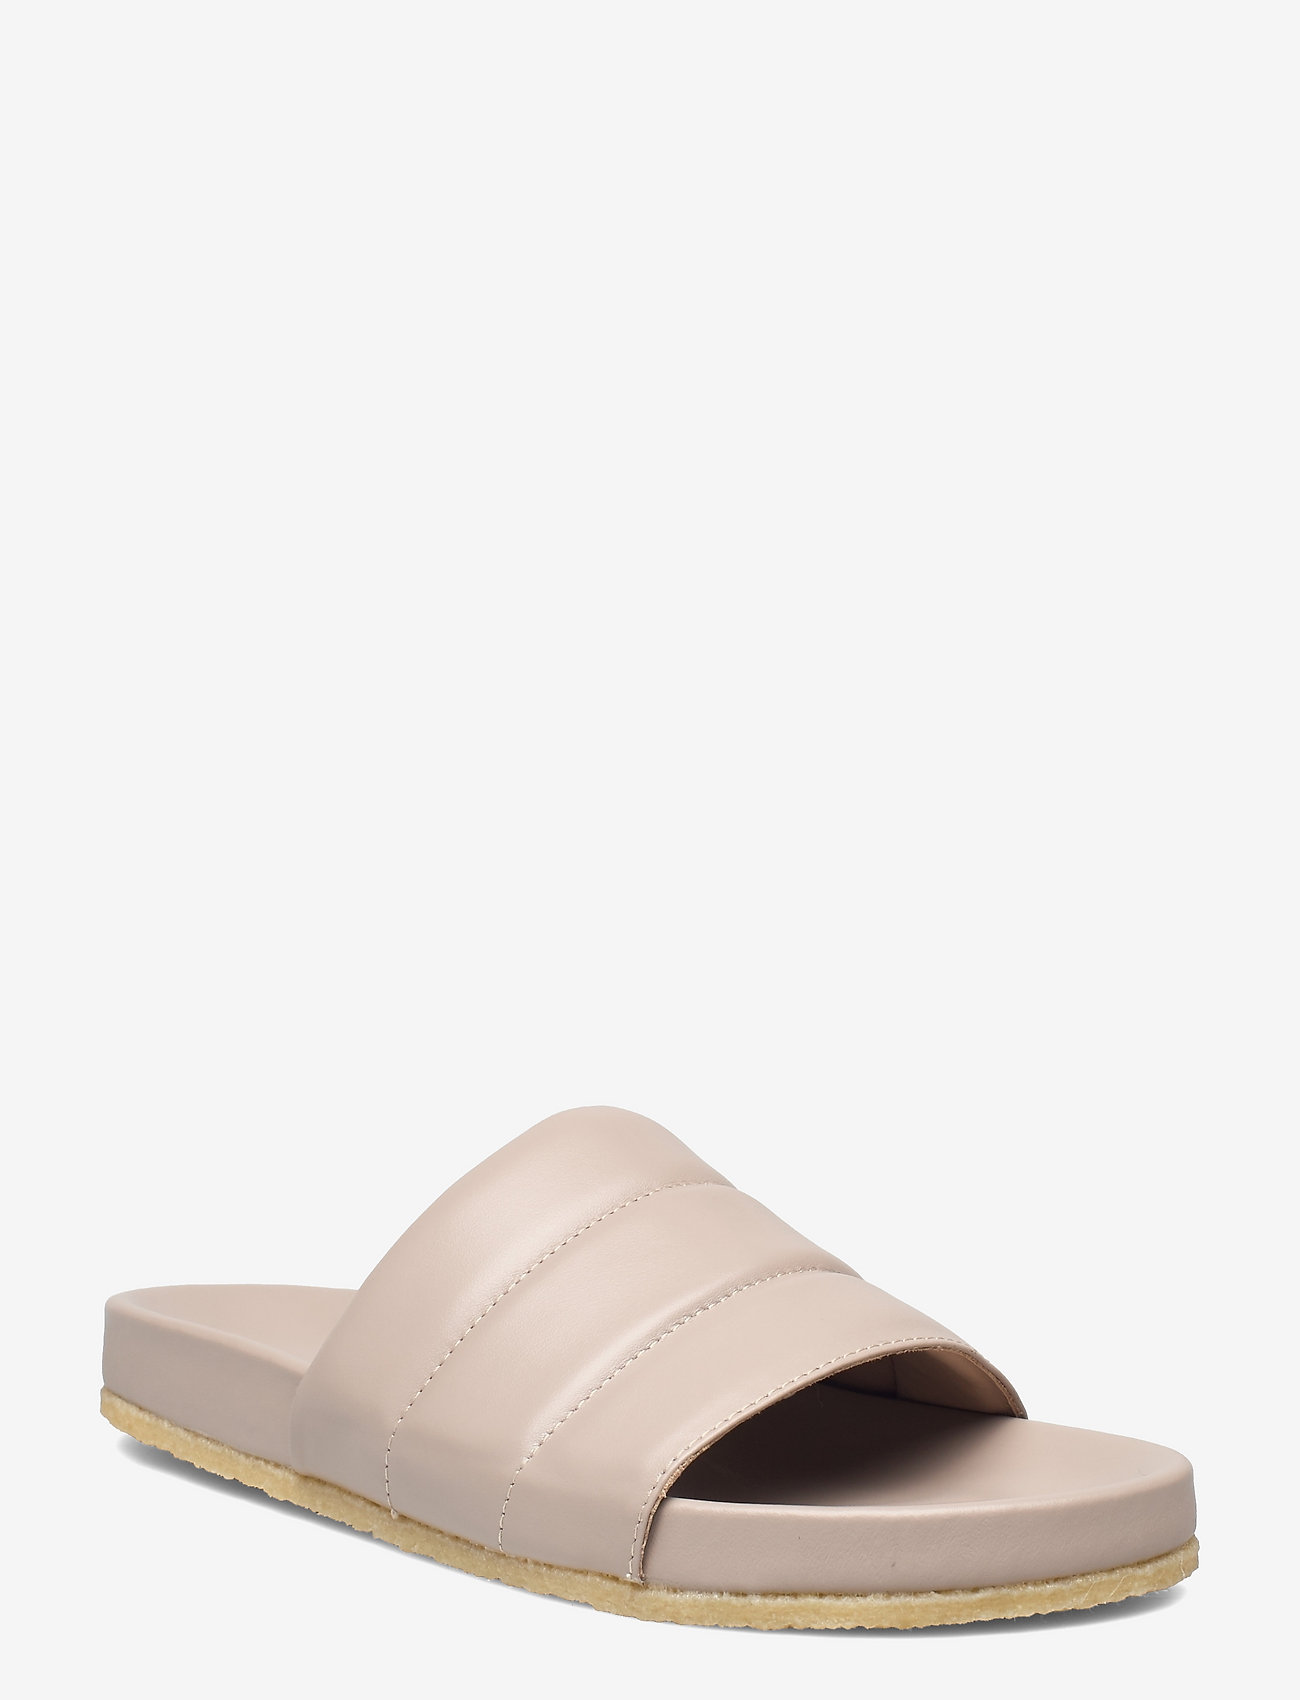 ANGULUS - Sandals - flat - open toe - op - flache sandalen - 1501 light beige - 0